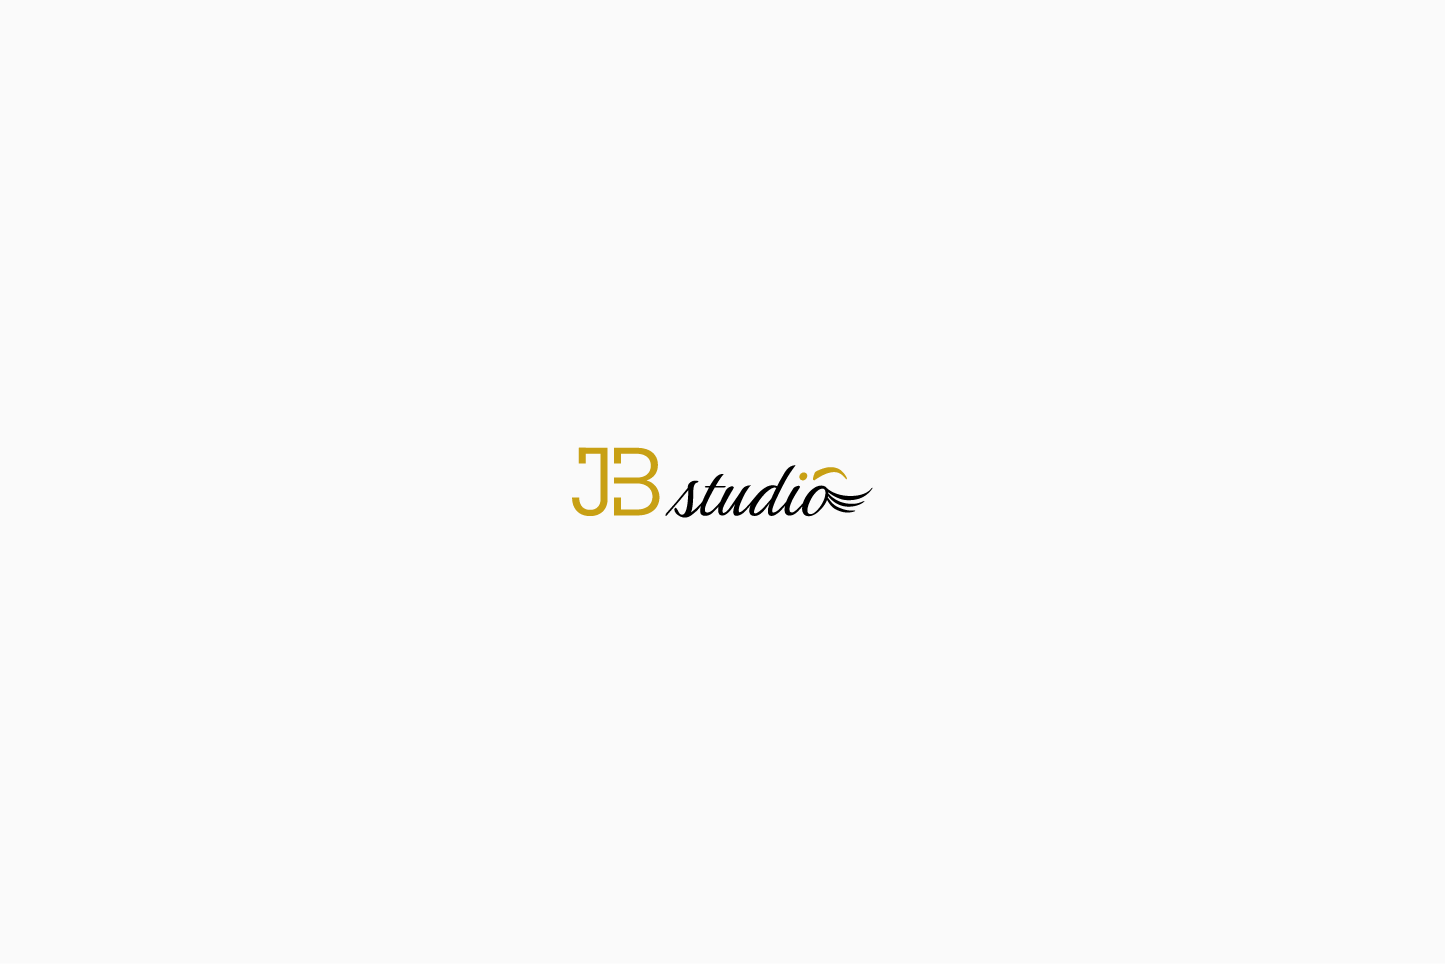 JB studio - logo - barevný pozitiv